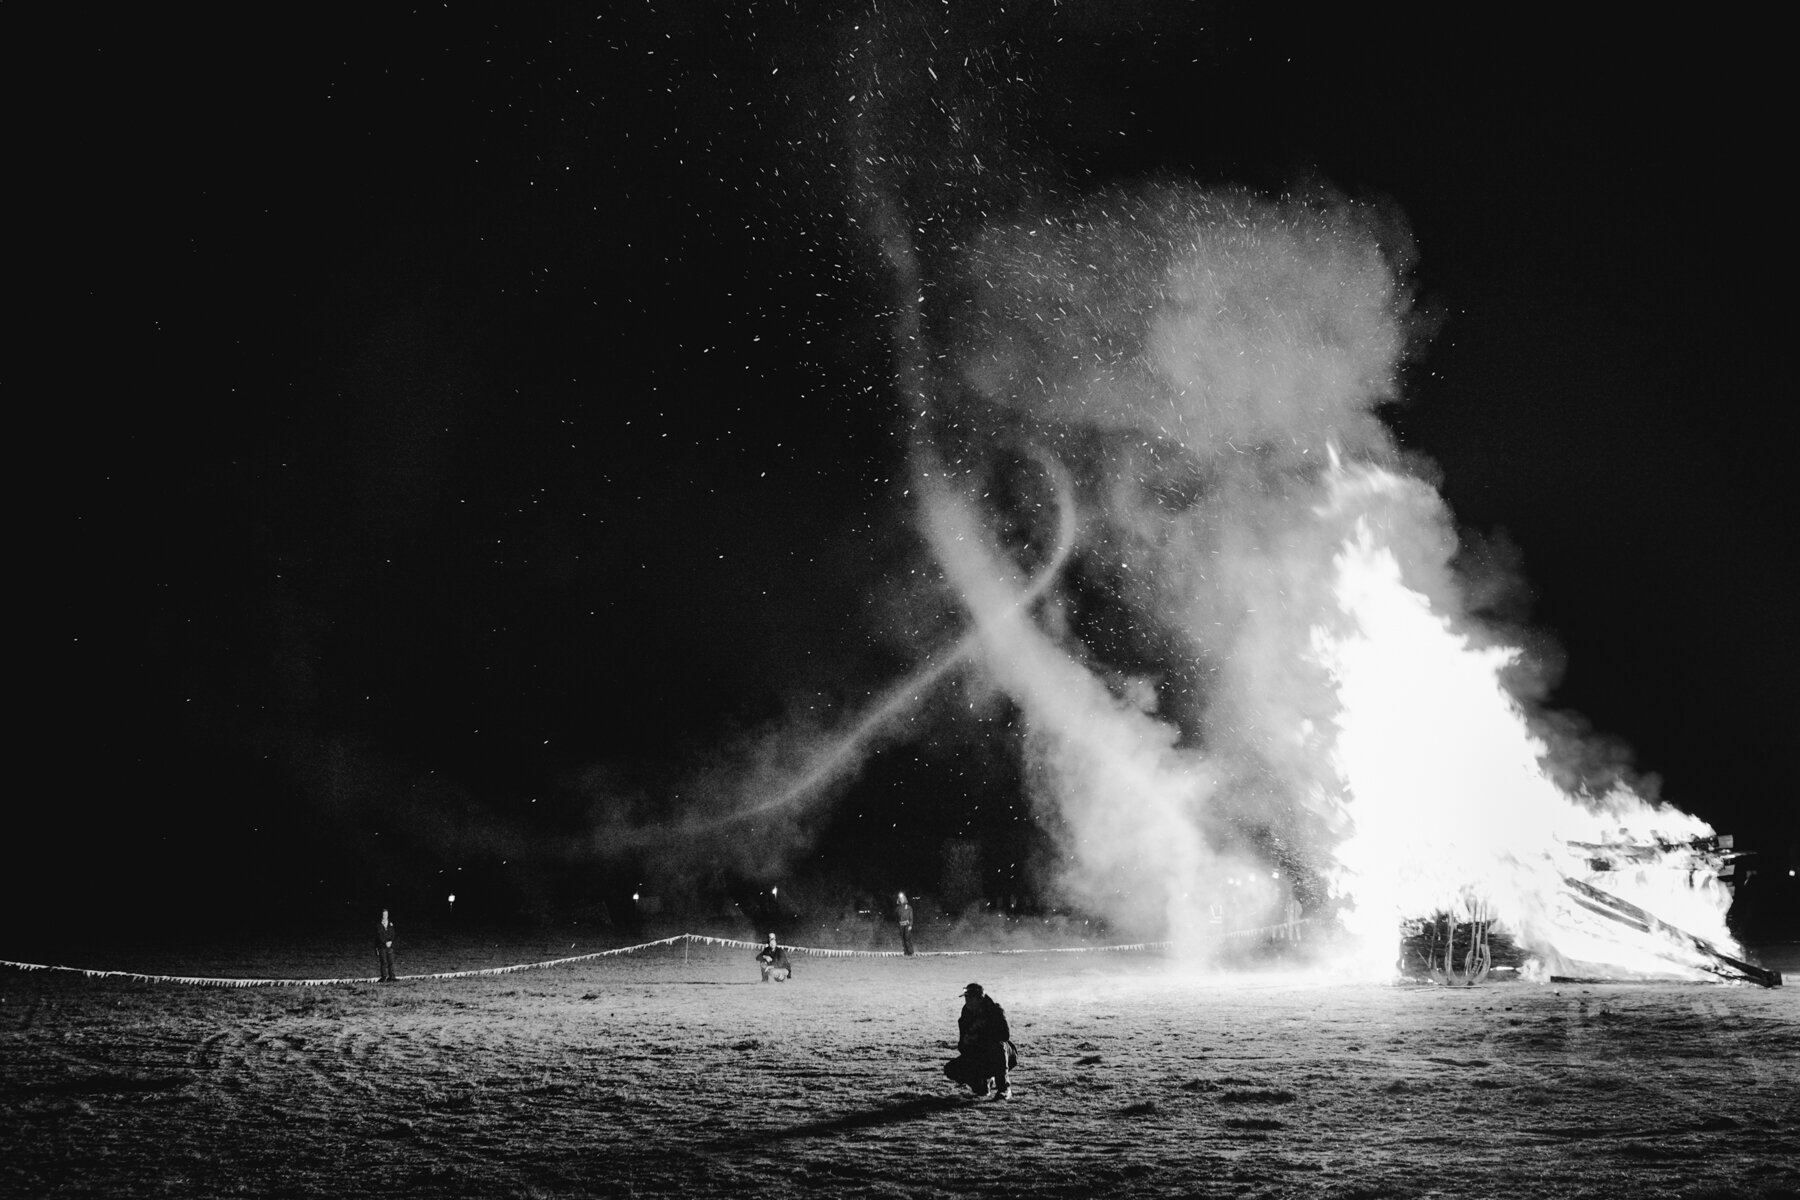  Effigy burn night at Modifyre - QLD + Northern NSW regional Burning Man event, 2018 